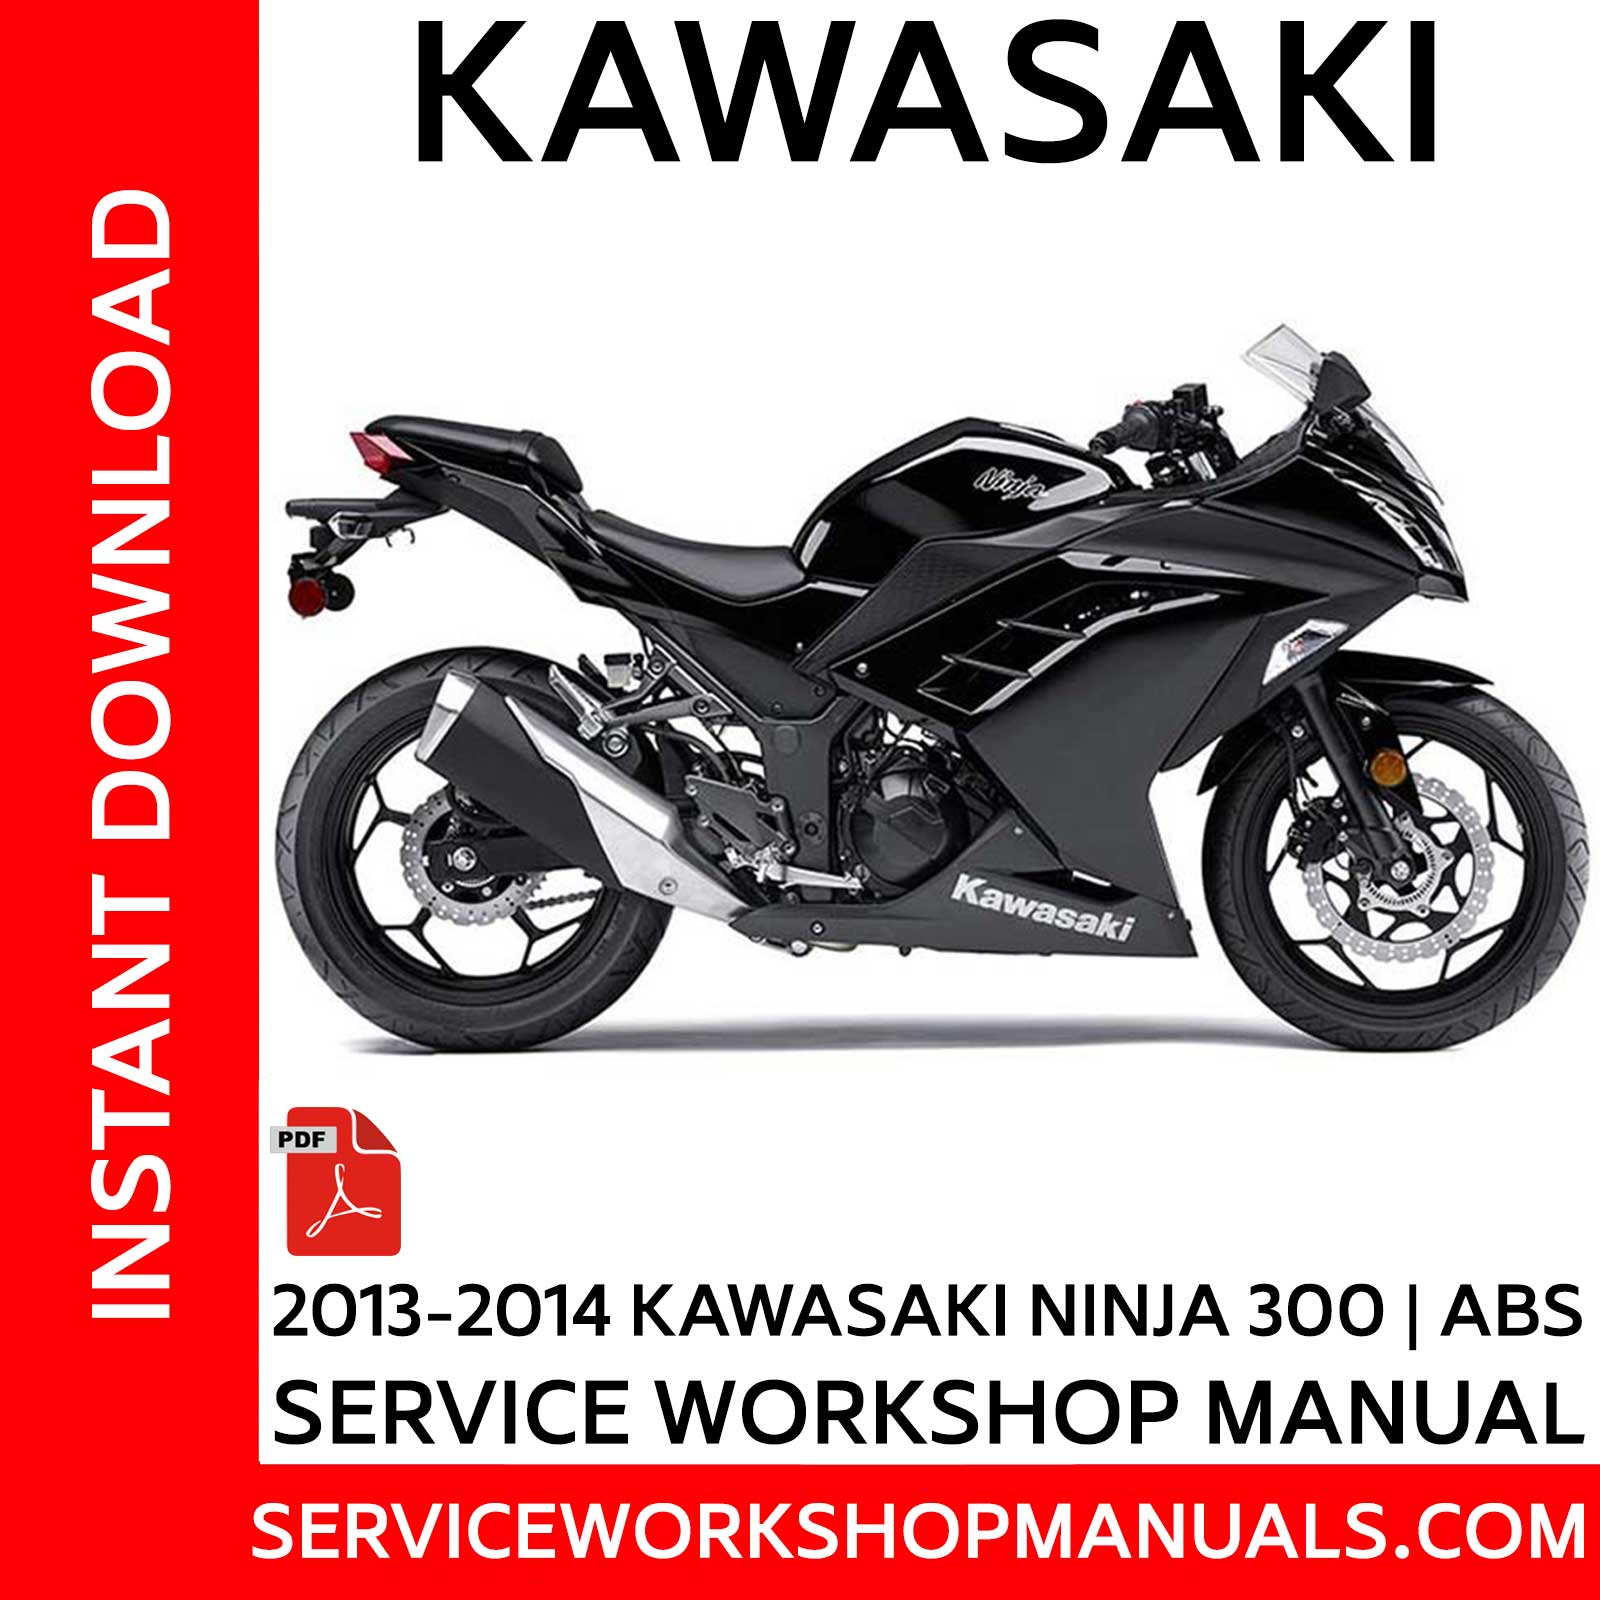 Kawasaki Ninja 300 | ABS Service - Service Manuals